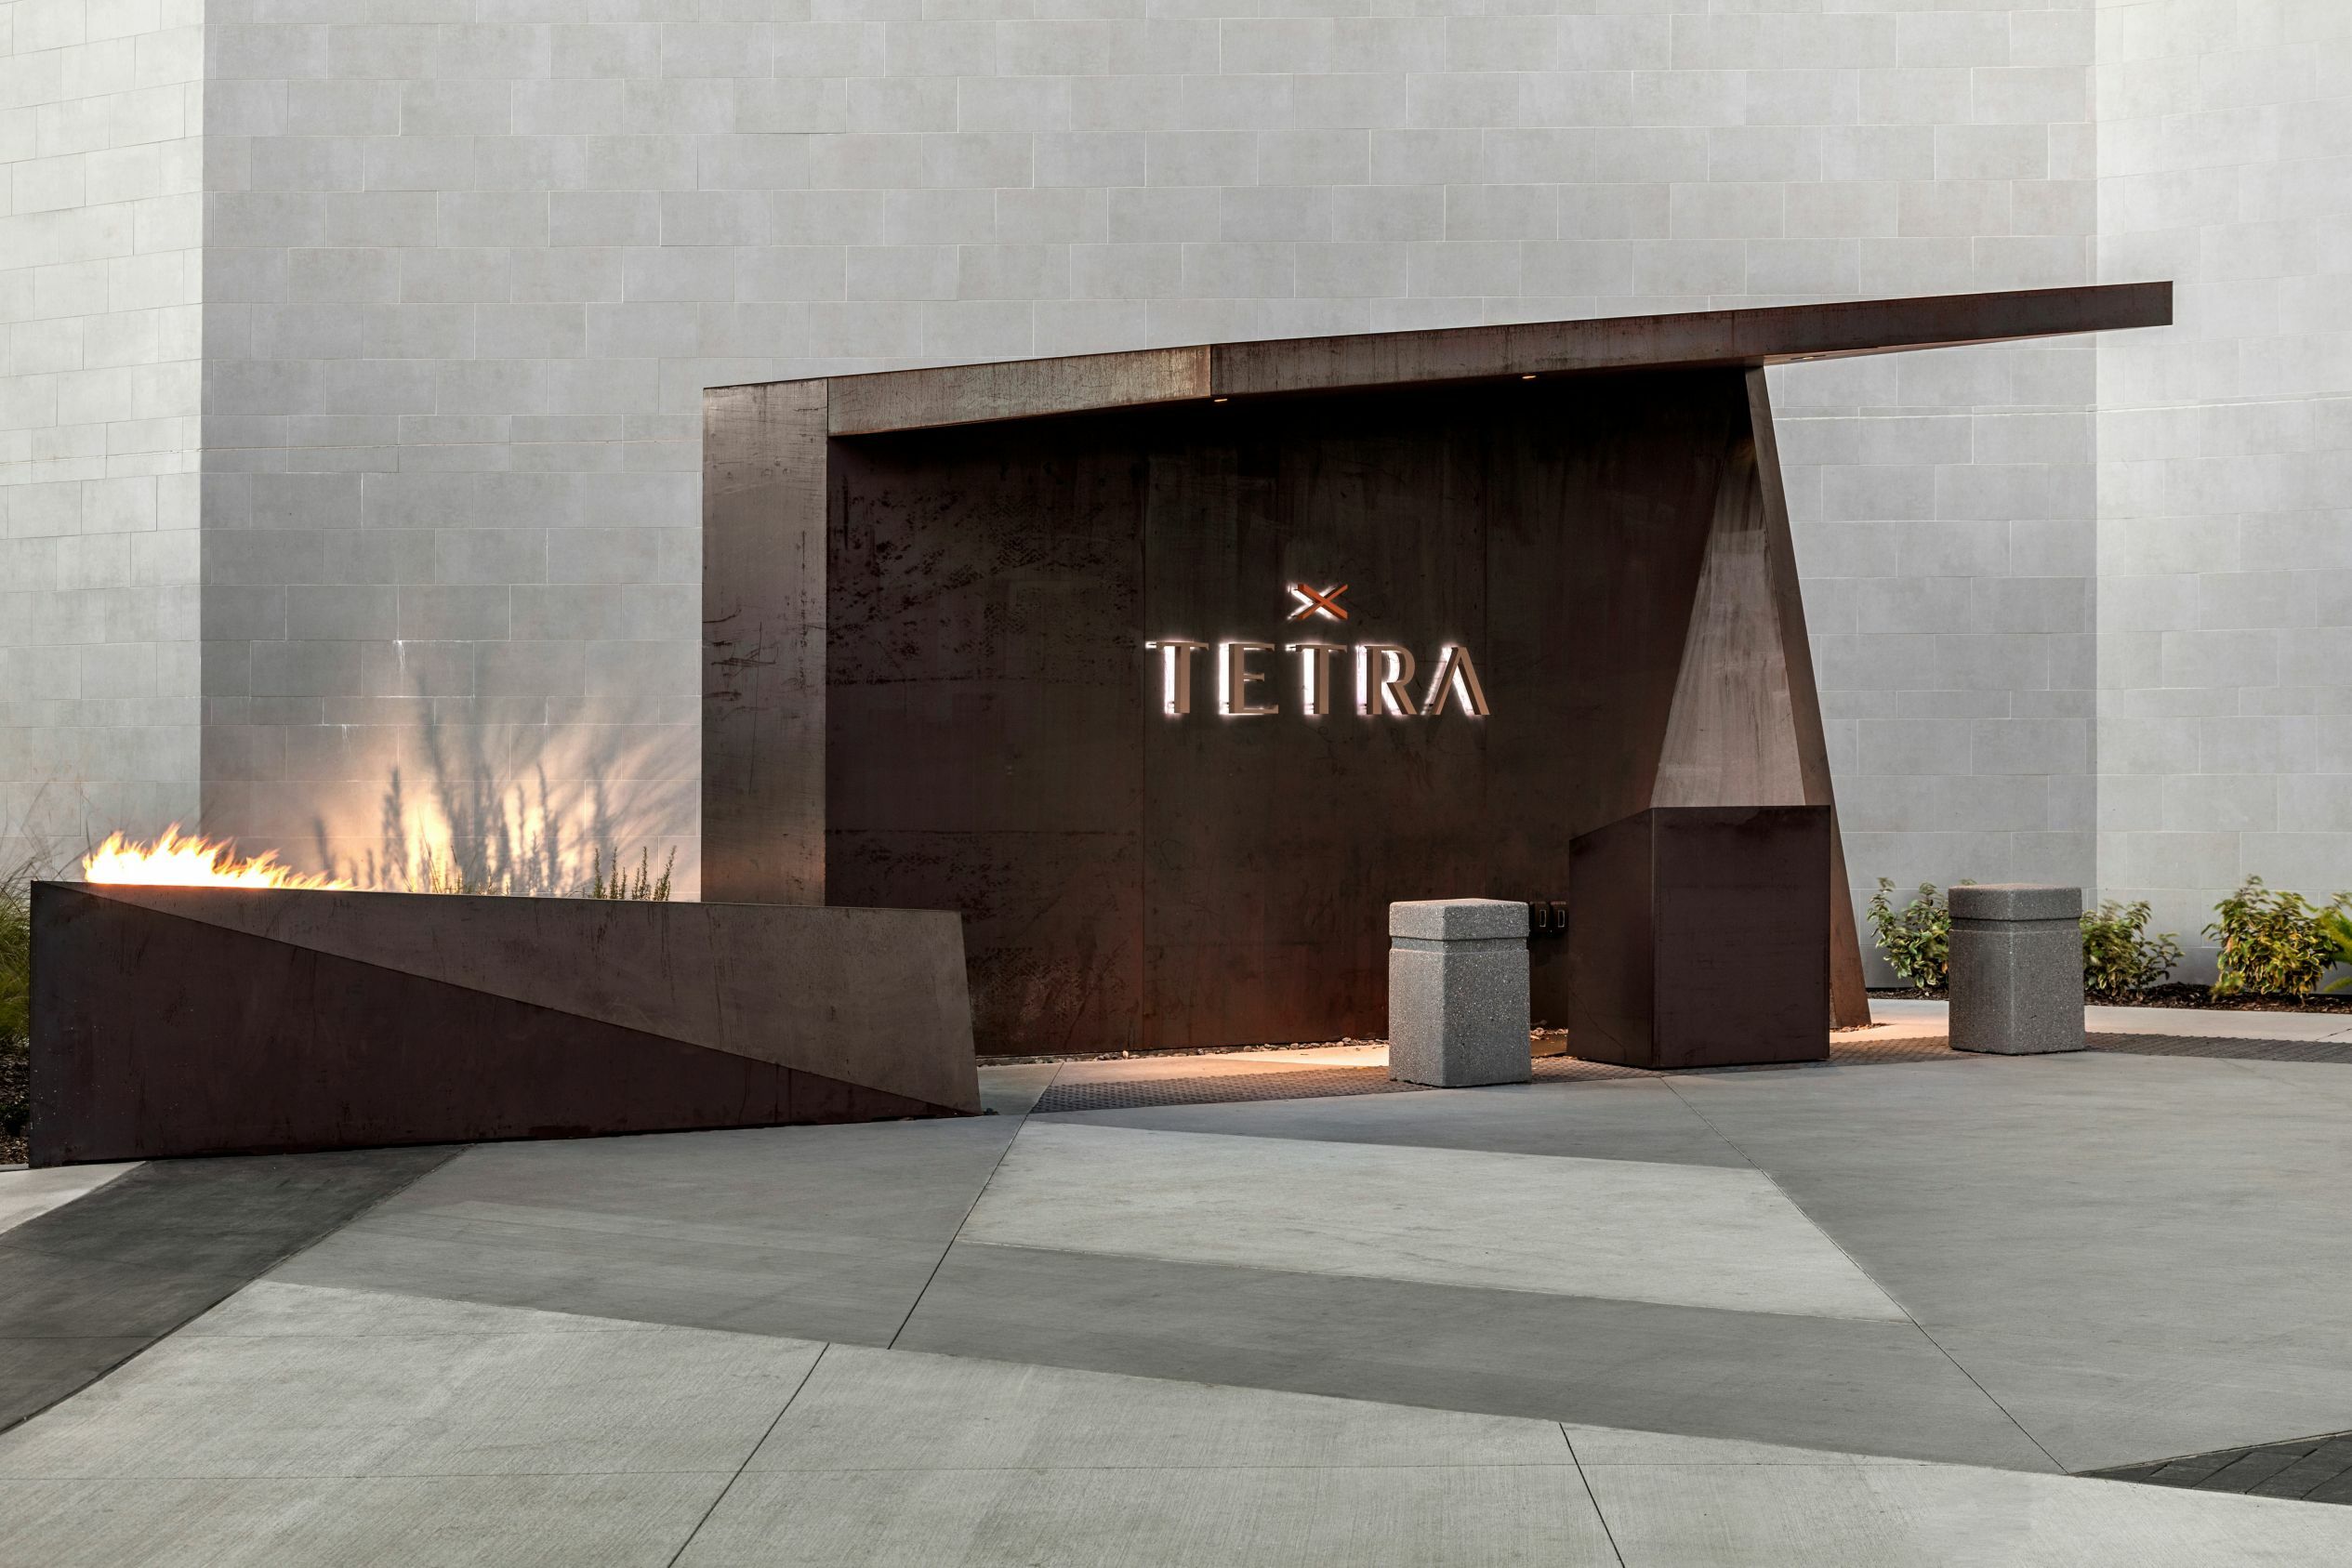 Photo of Tetra Hotel - An Autograph Collection, Sunnyvale, CA